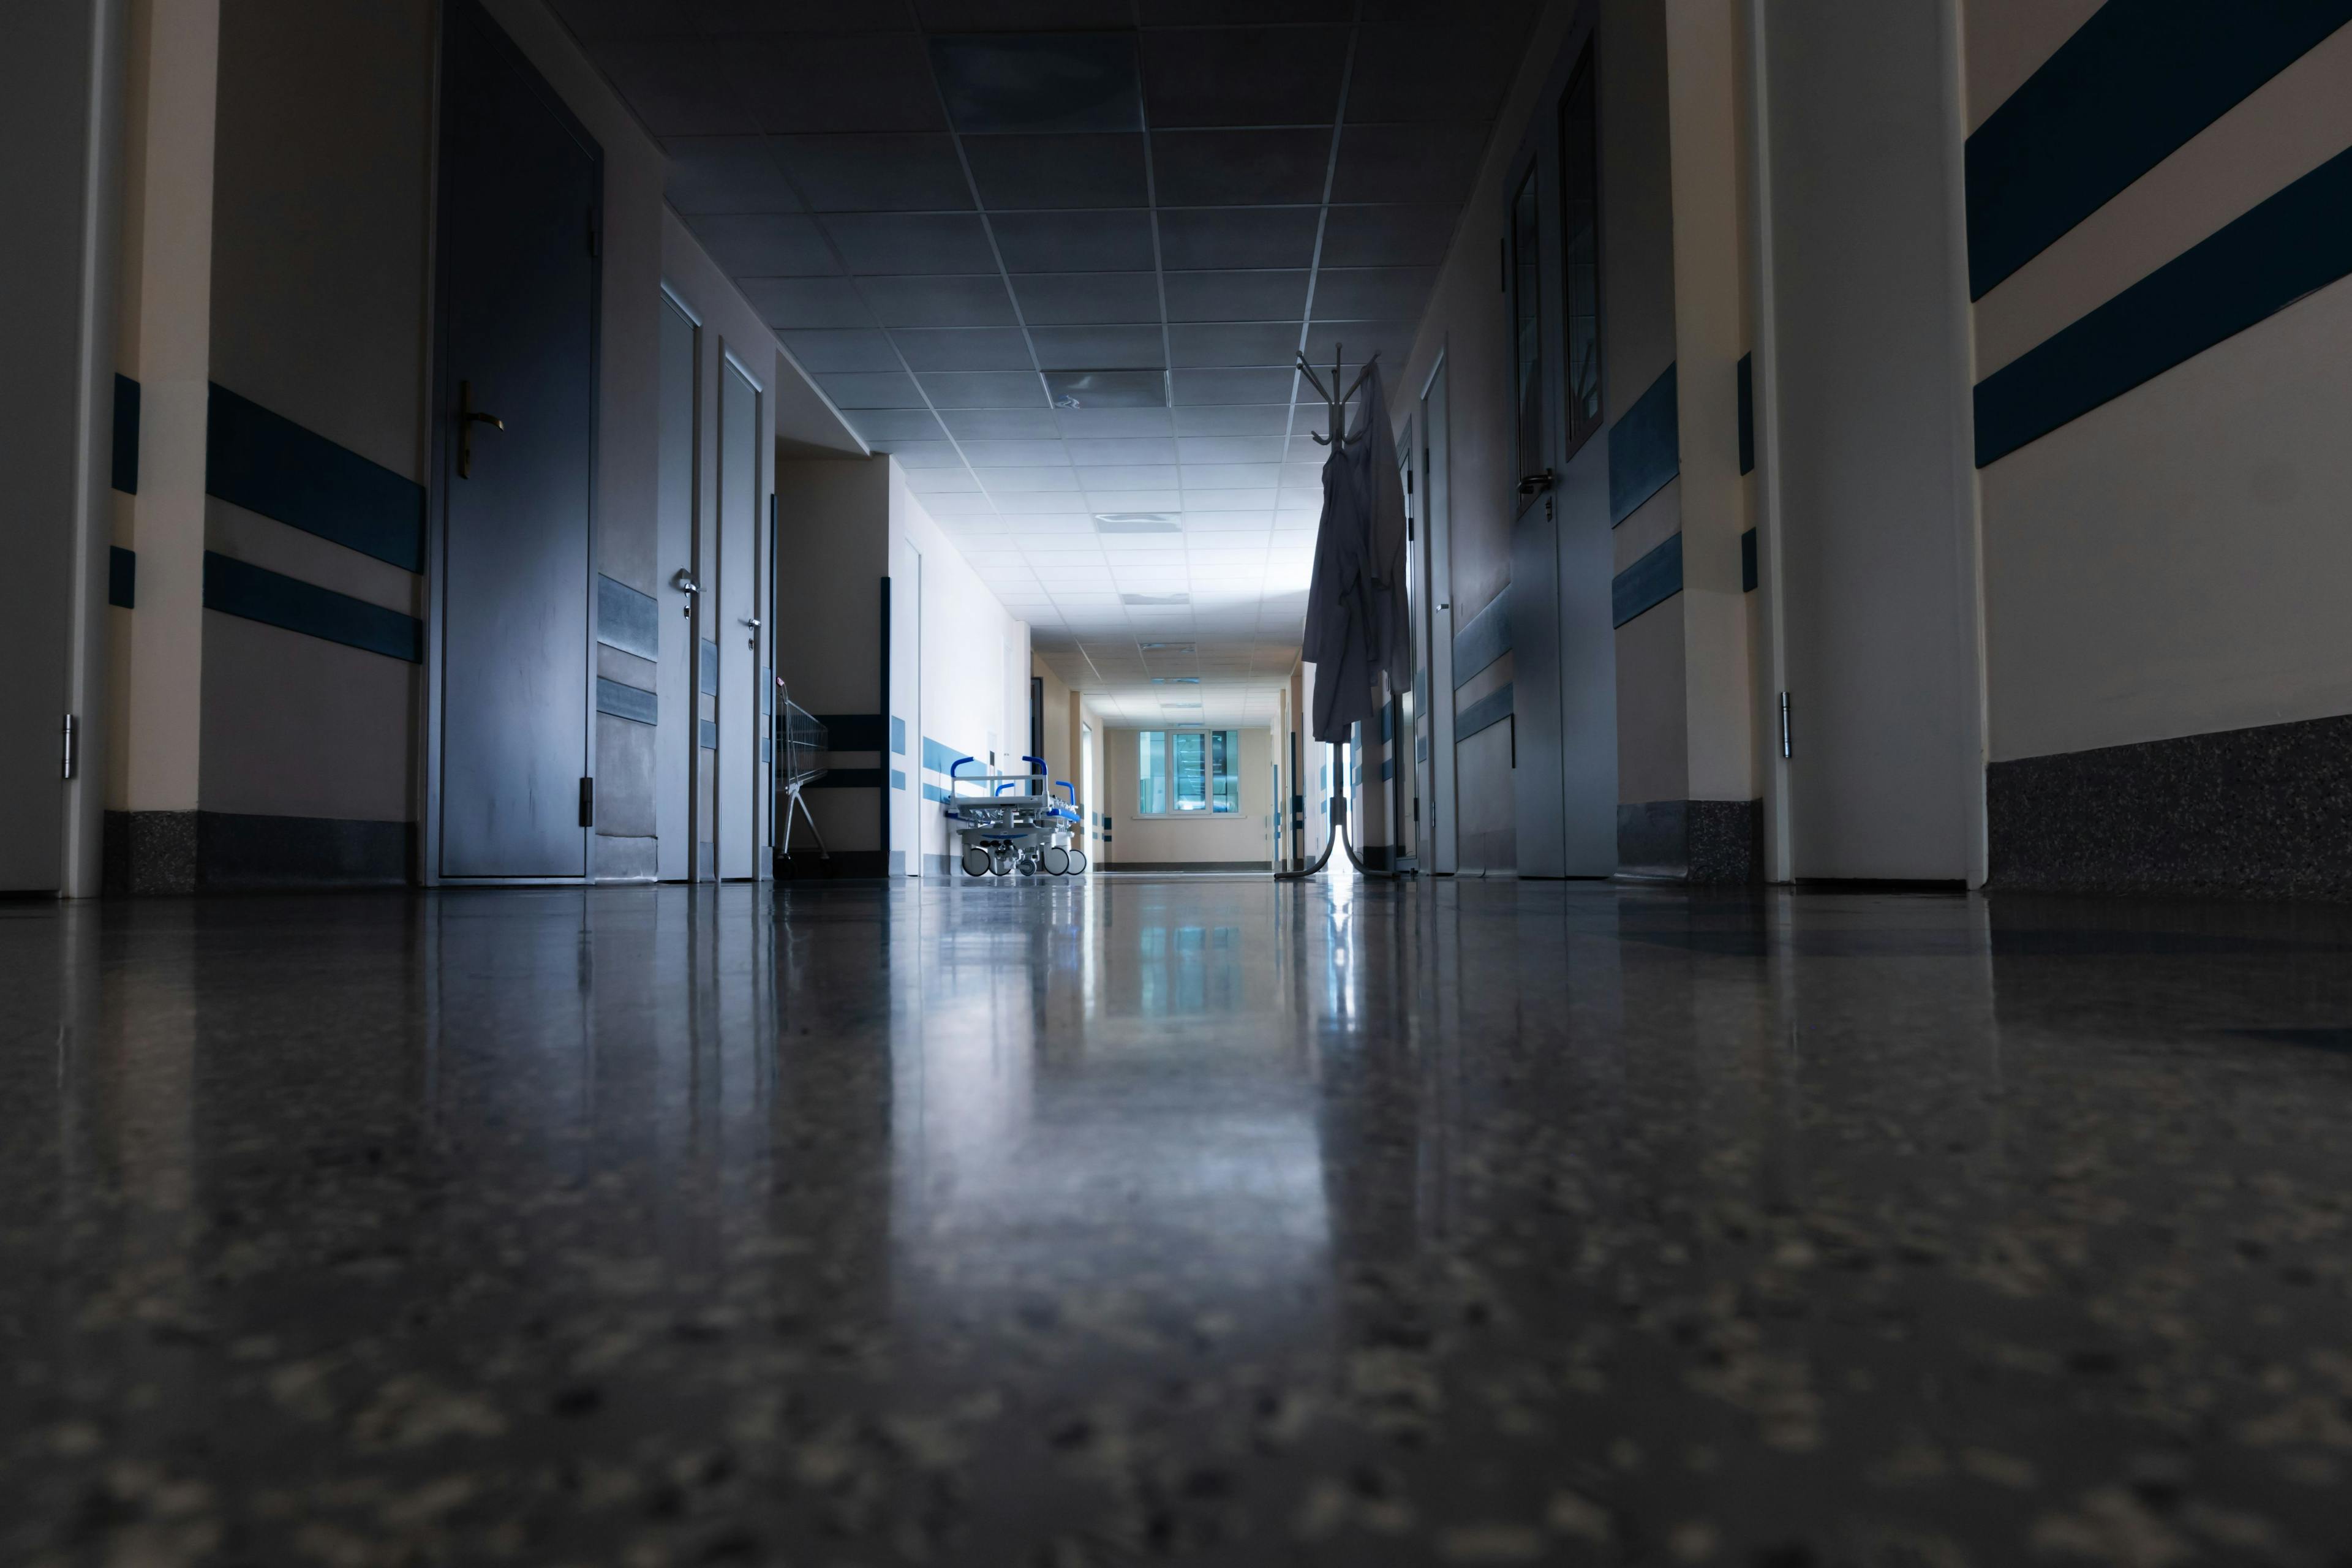 'Devastating': Hospitals saw steep decline in margins in January